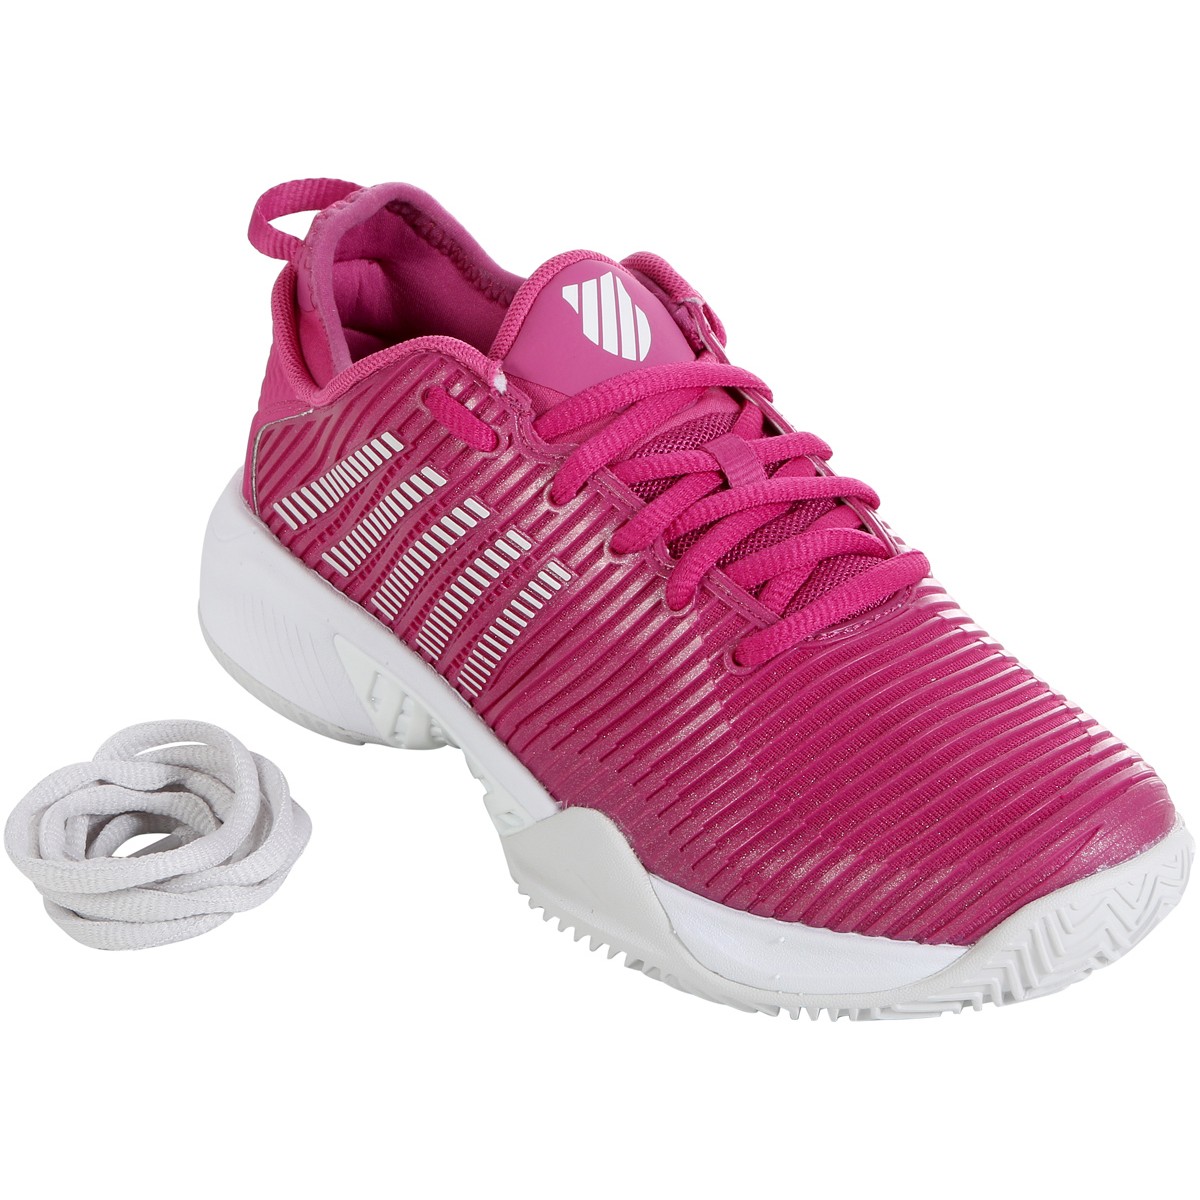 Hypercourt Supreme Shoe.. +80 Most Inspiring Workout Shoes Ideas for Women - 10